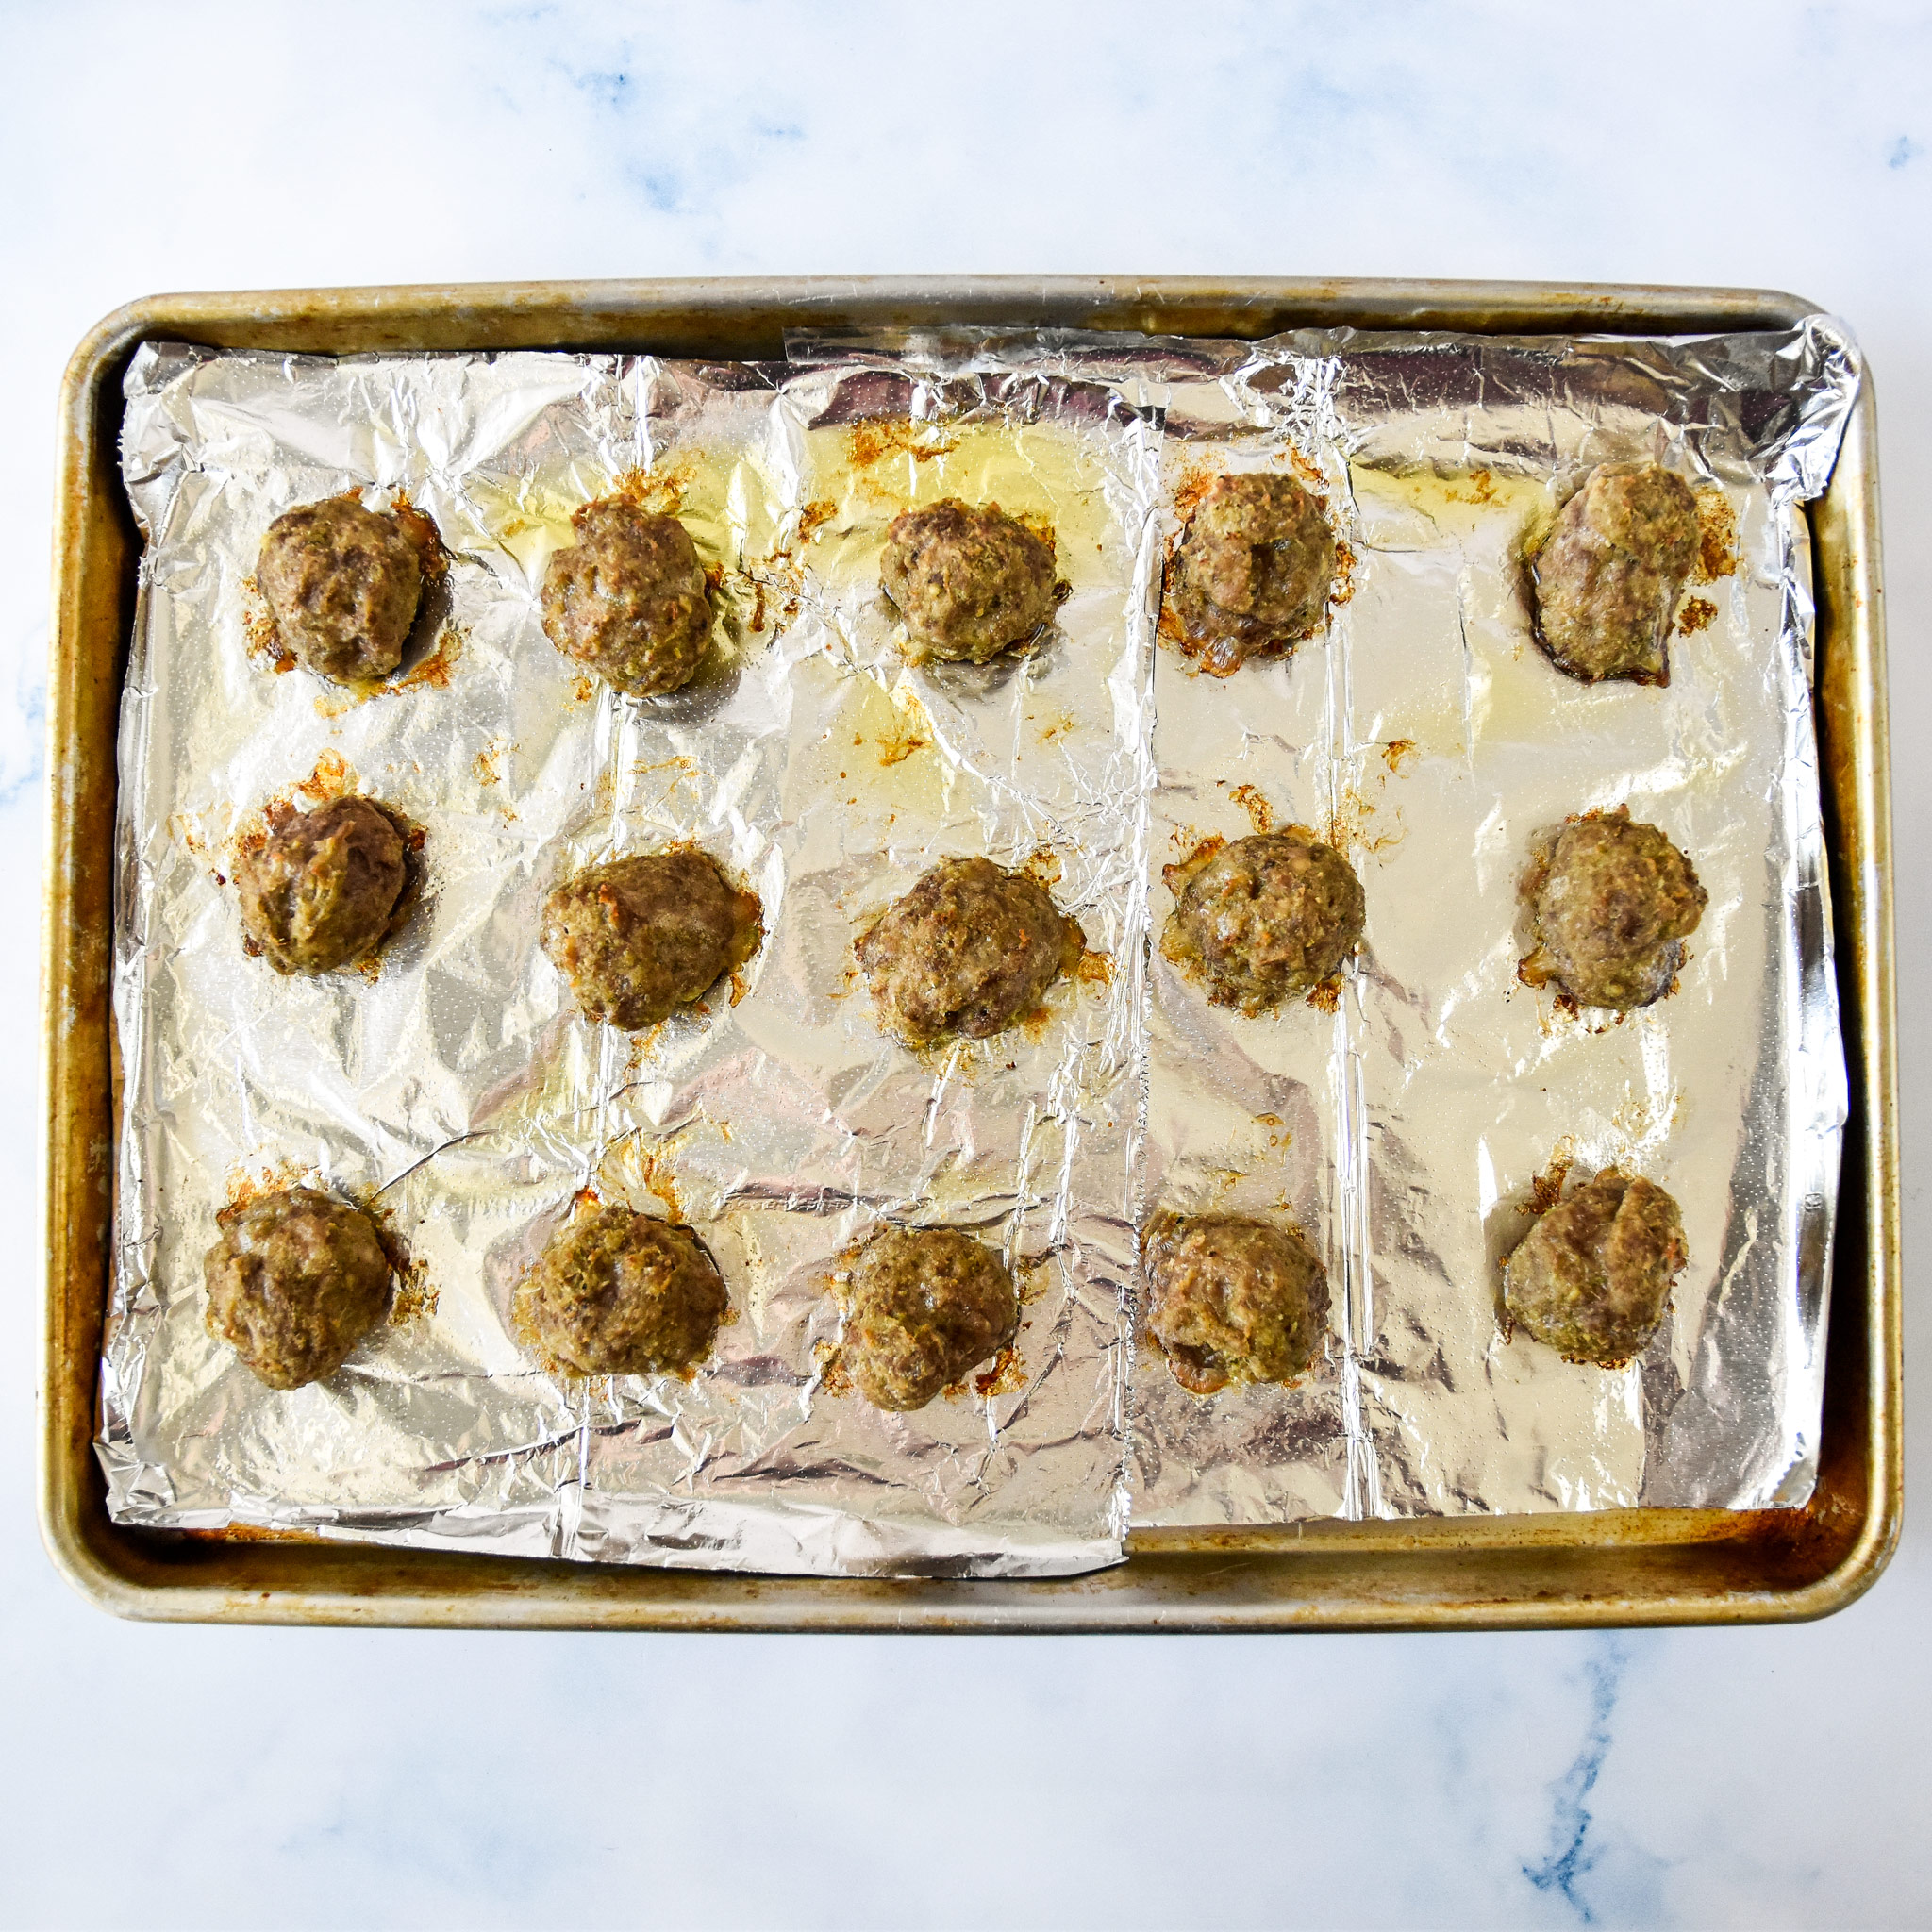 fresh baked easy freezer friendly meatballs on a sheet pan.